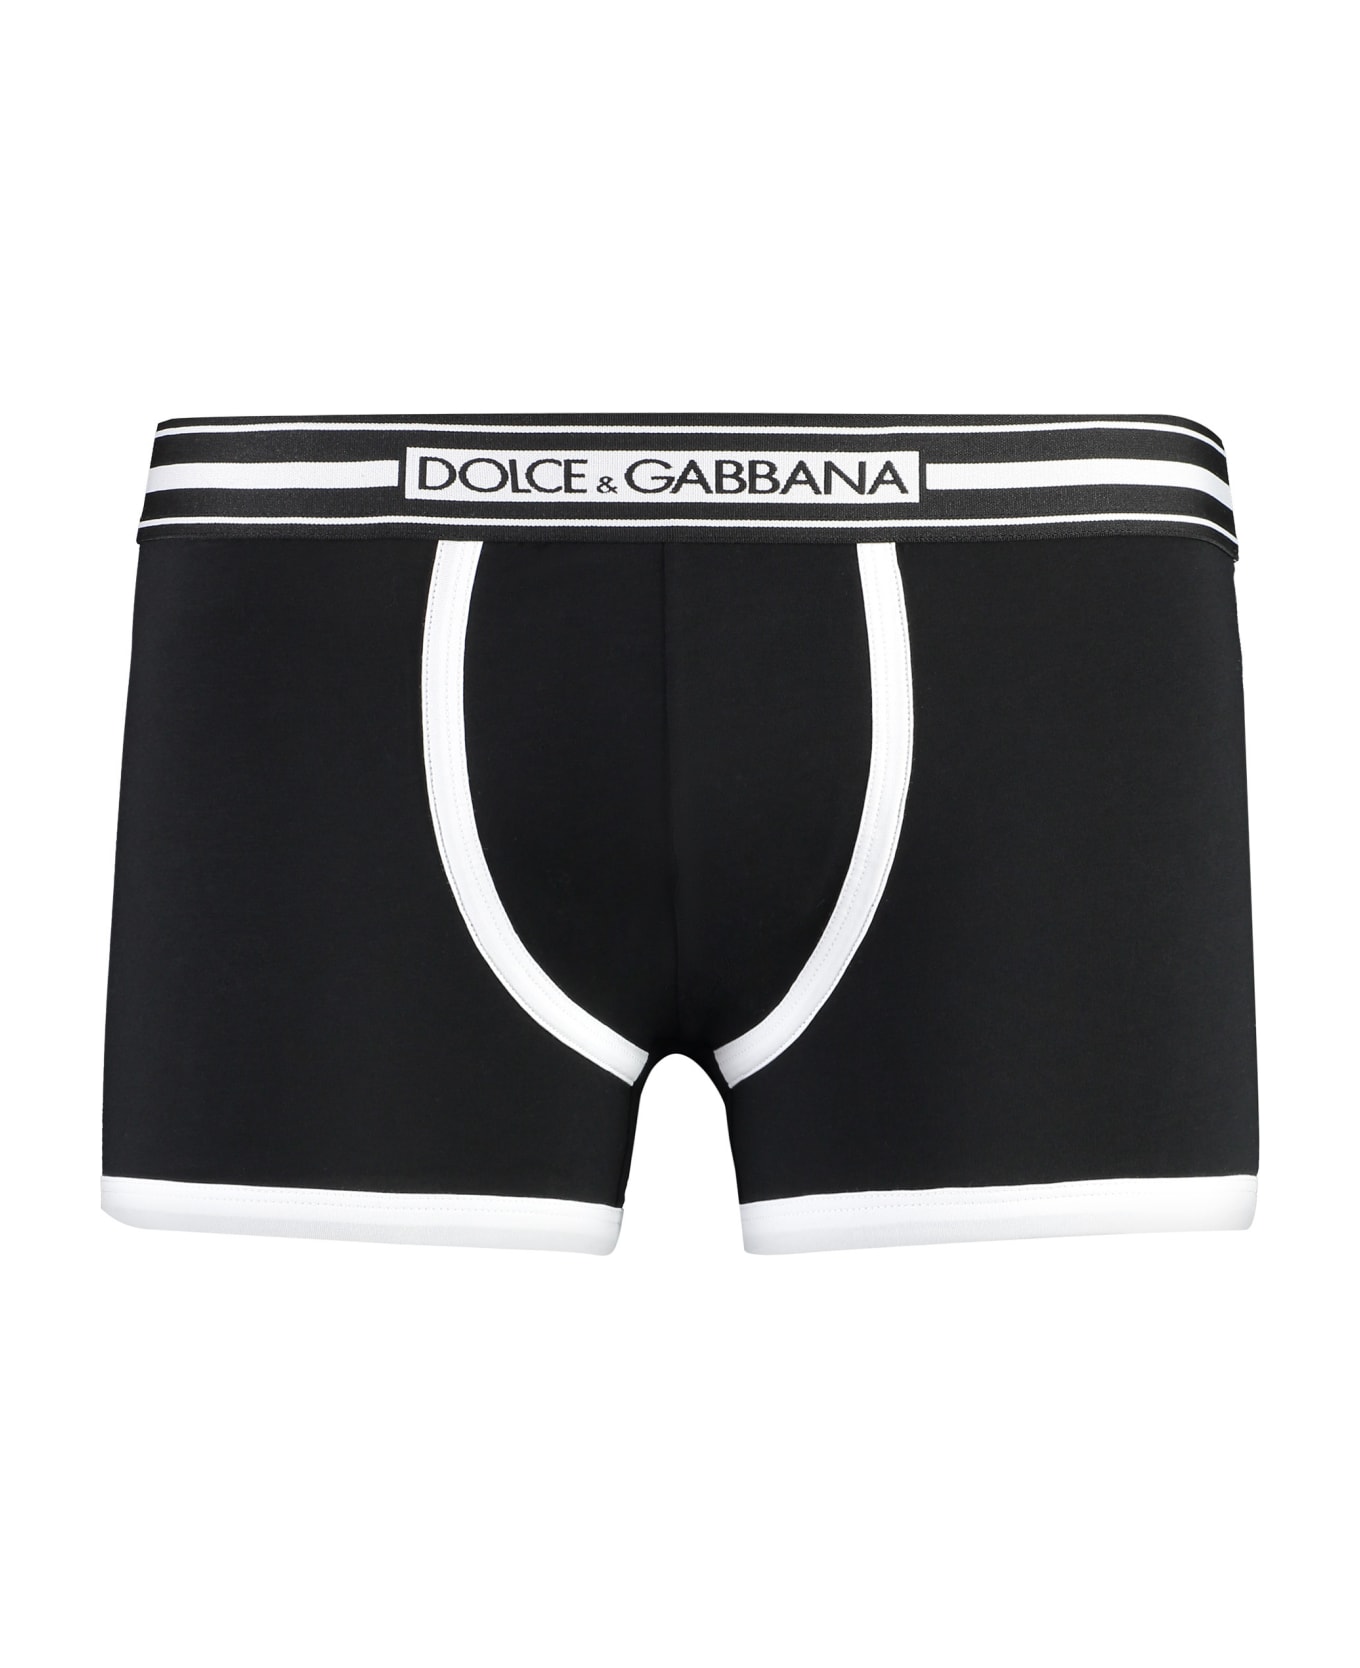 Dolce & Gabbana Logoed Elastic Band Cotton Trunks - BLACK/WHITE